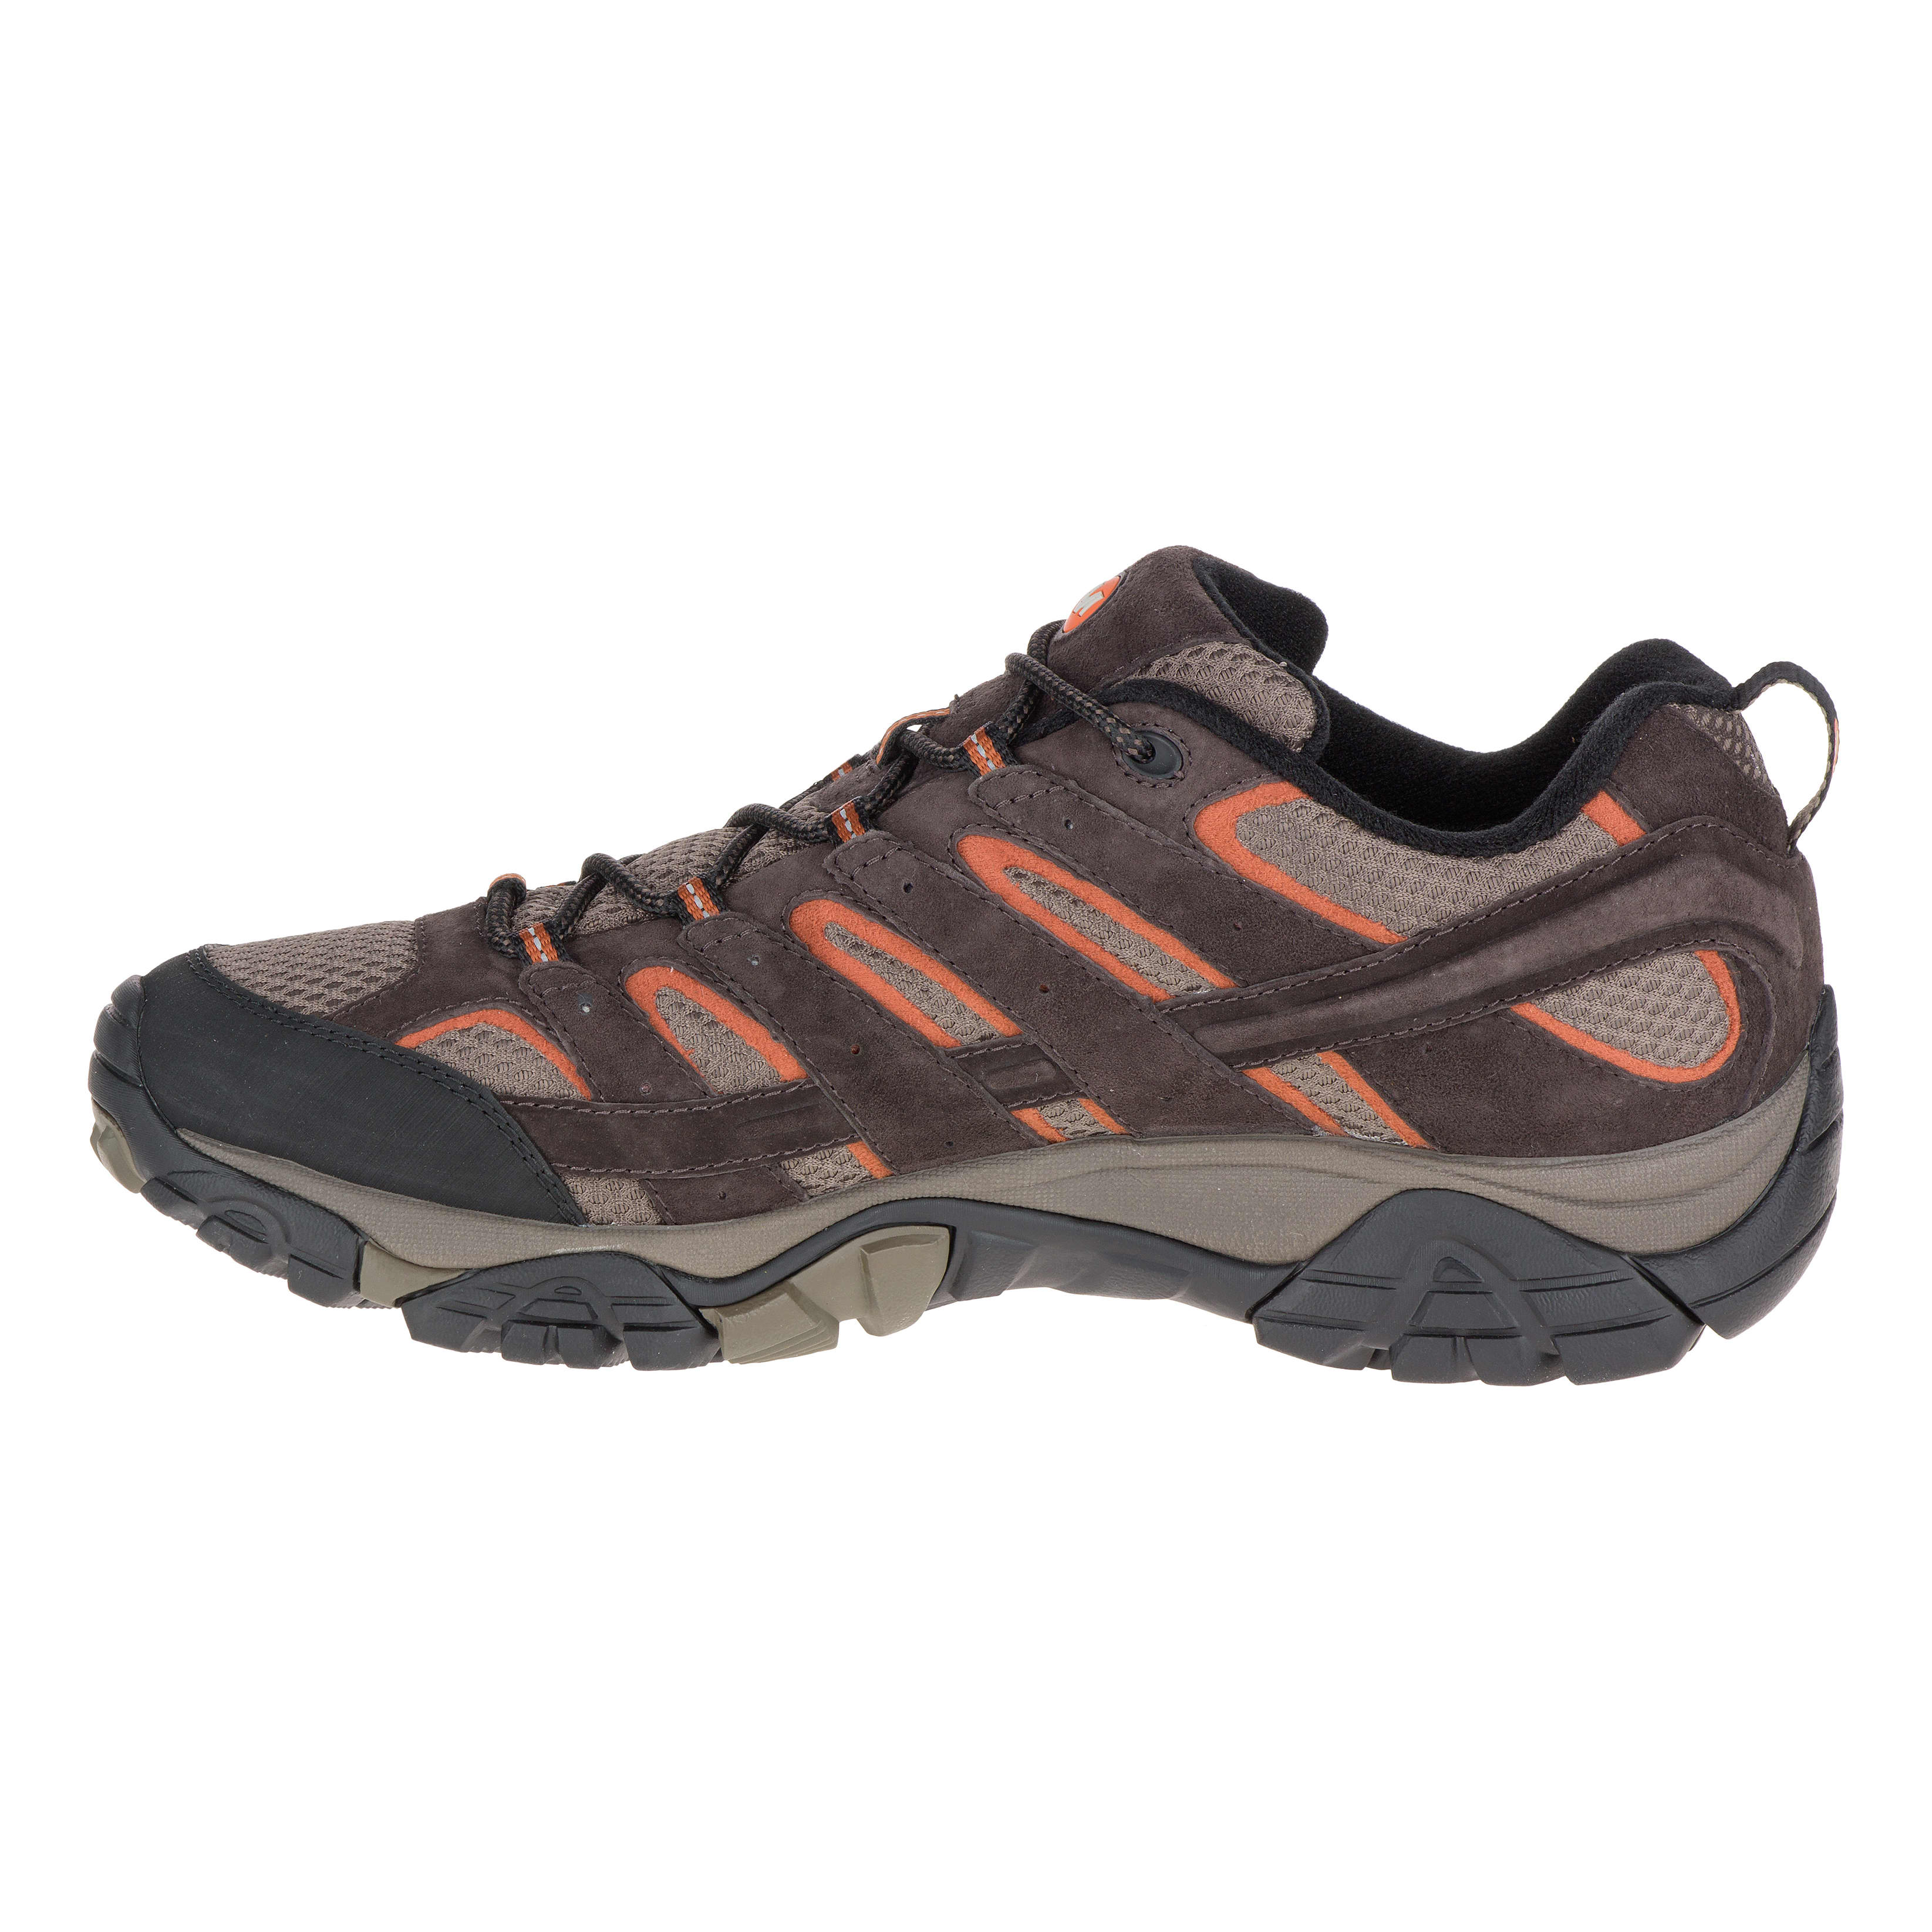 Merrell® Men’s Moab 2 Waterproof Hiking Shoes - side